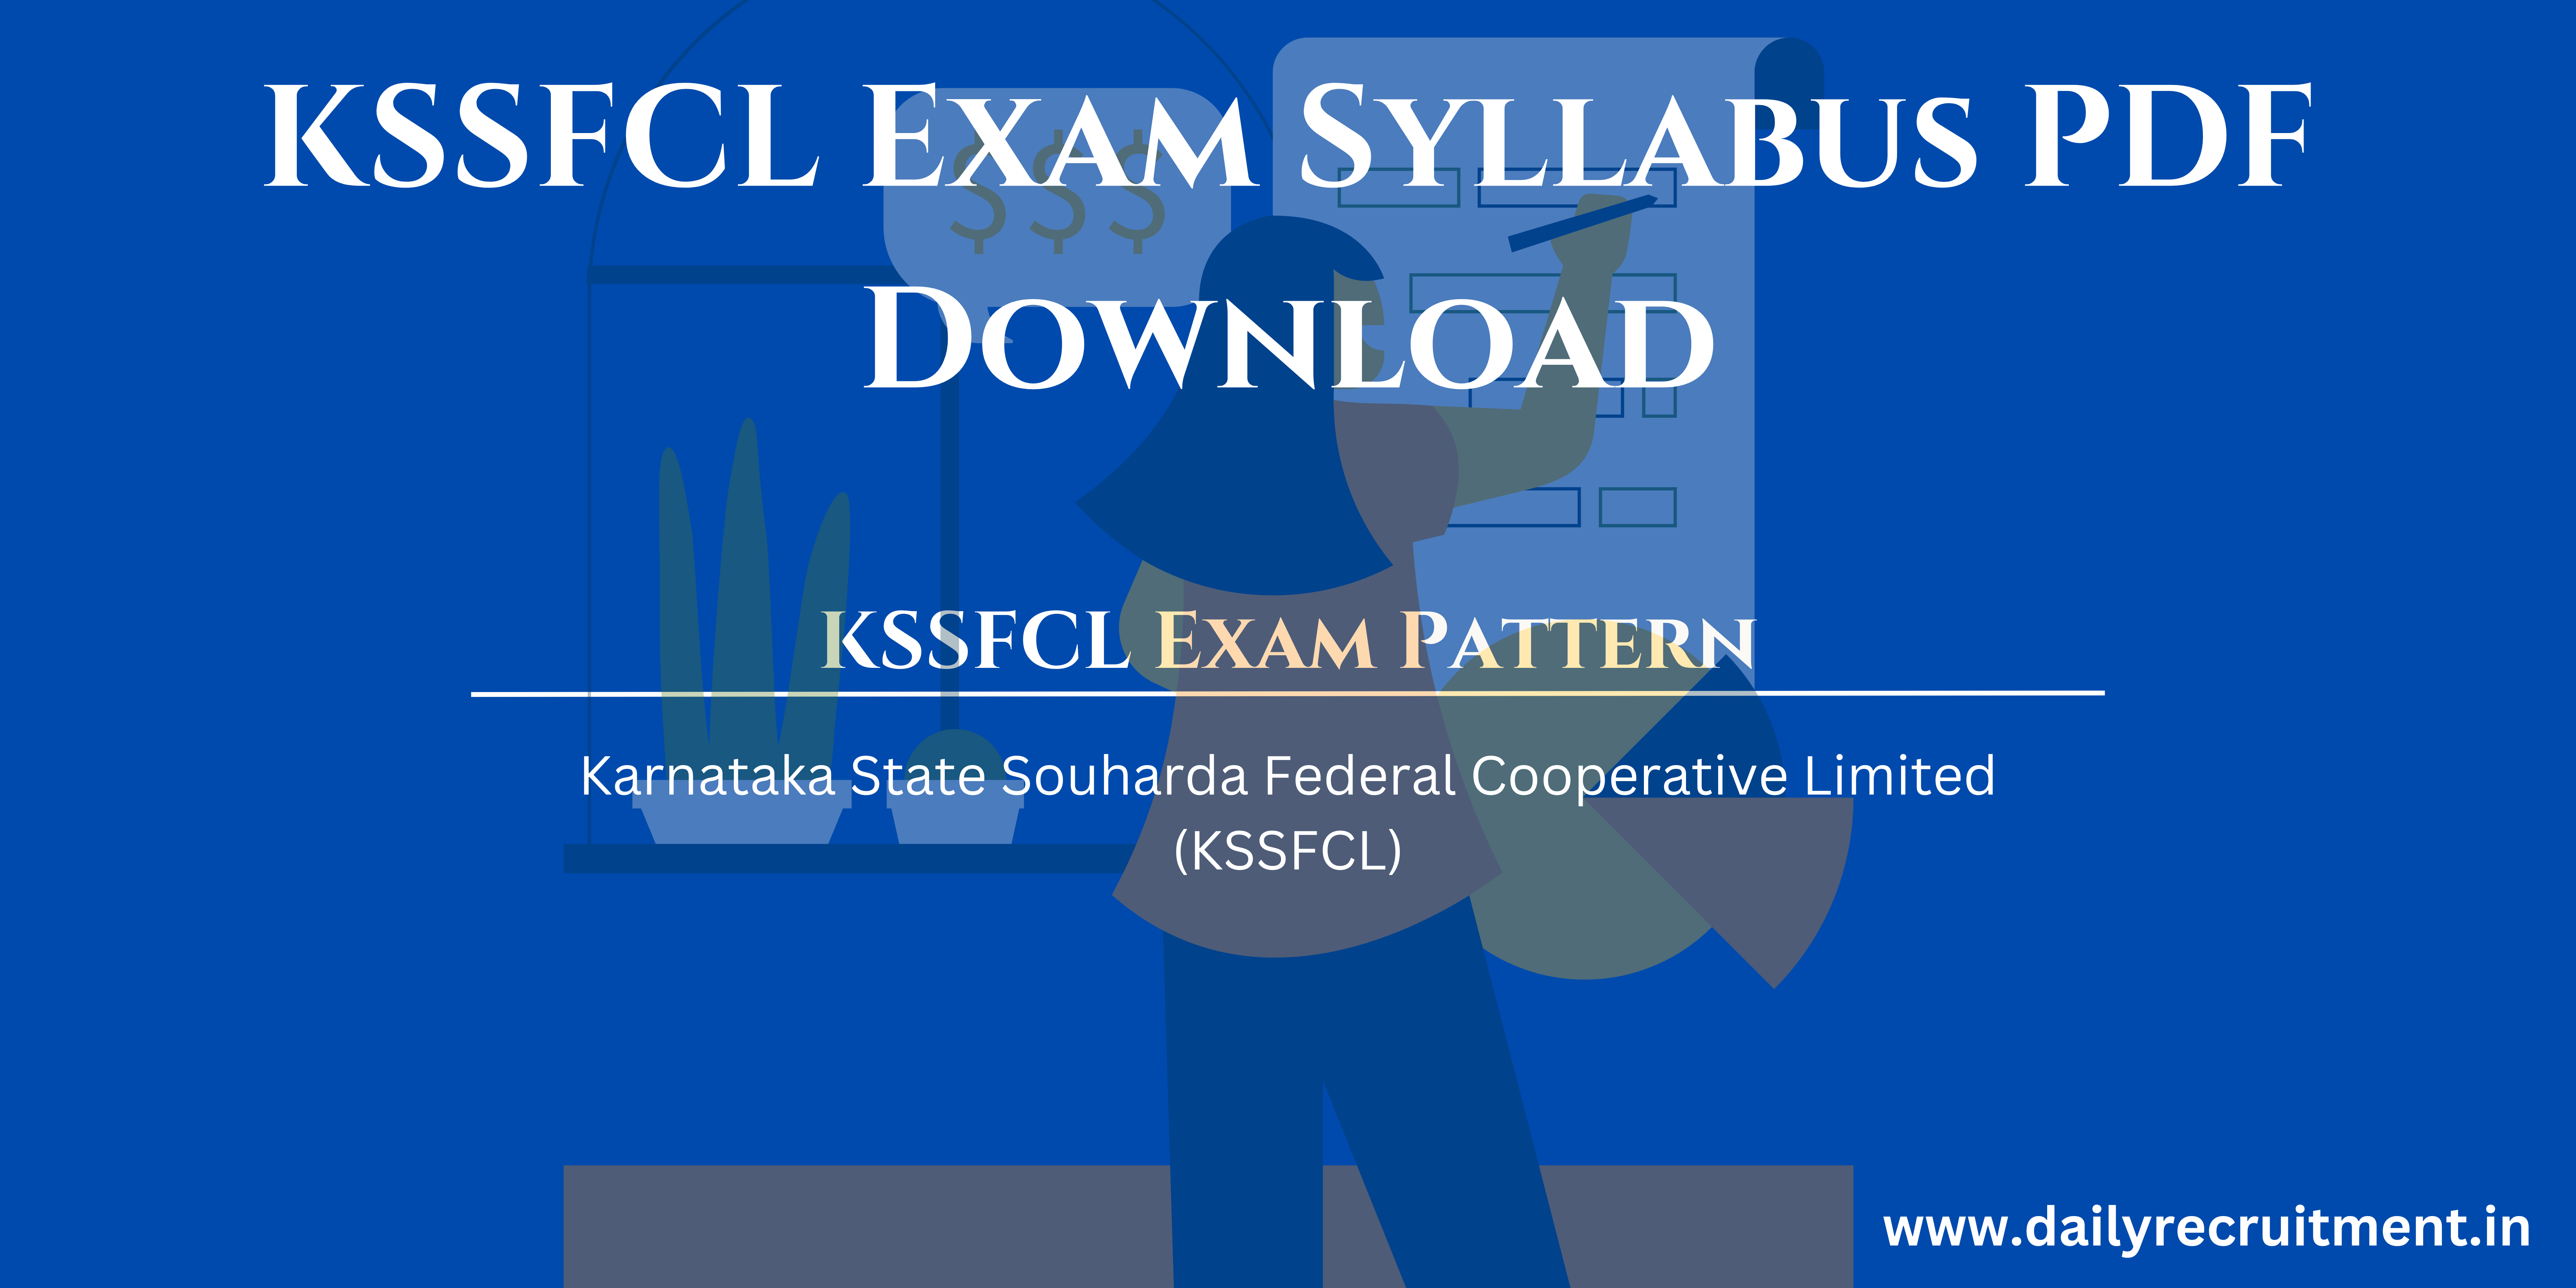 KSSFCL Exam Syllabus